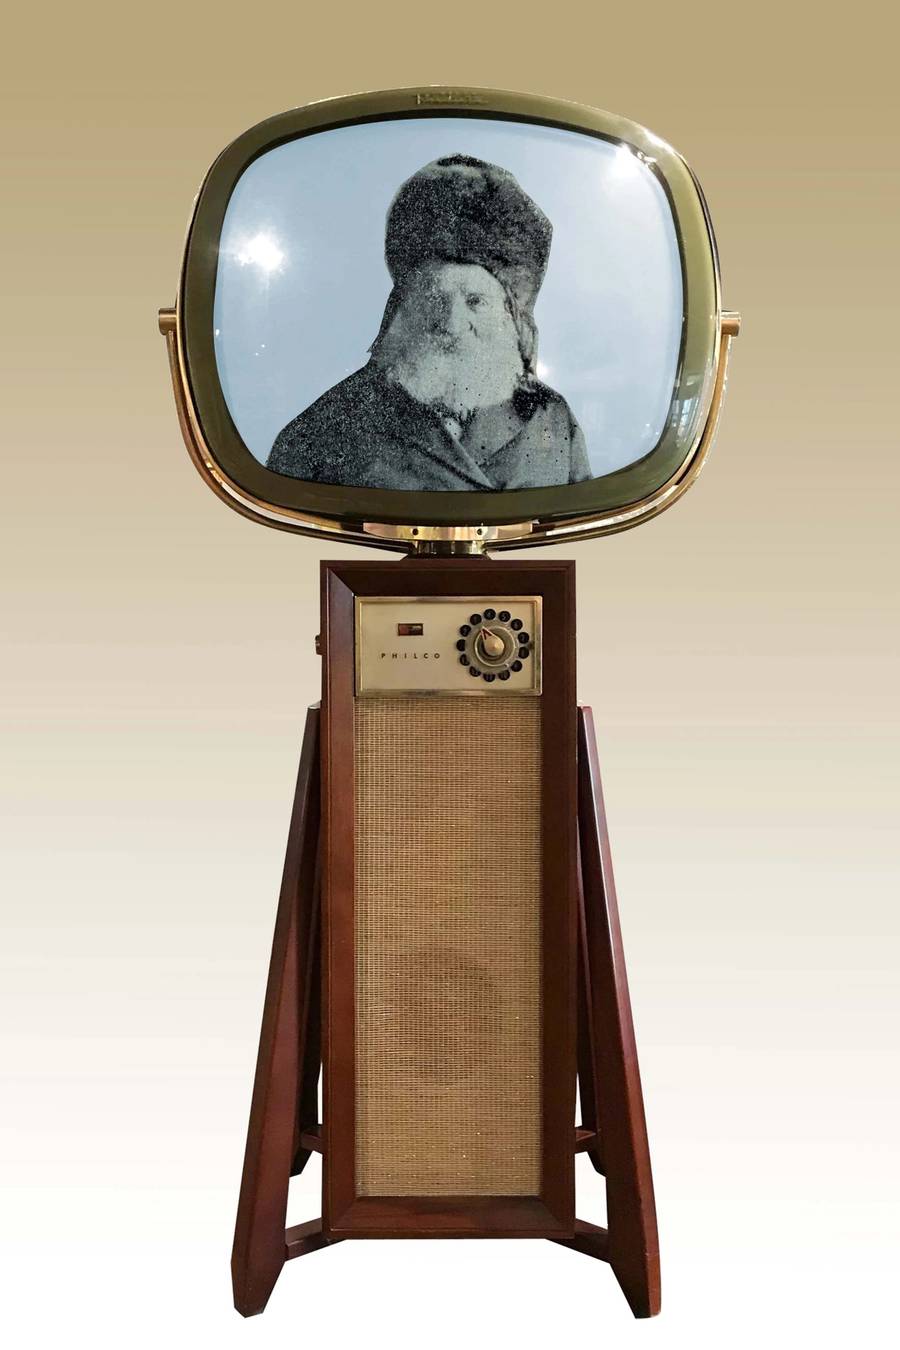 Rabbi Yitzchak Schmelkes’ halachic rulings dealt with predicted technologies, like teleconferencing